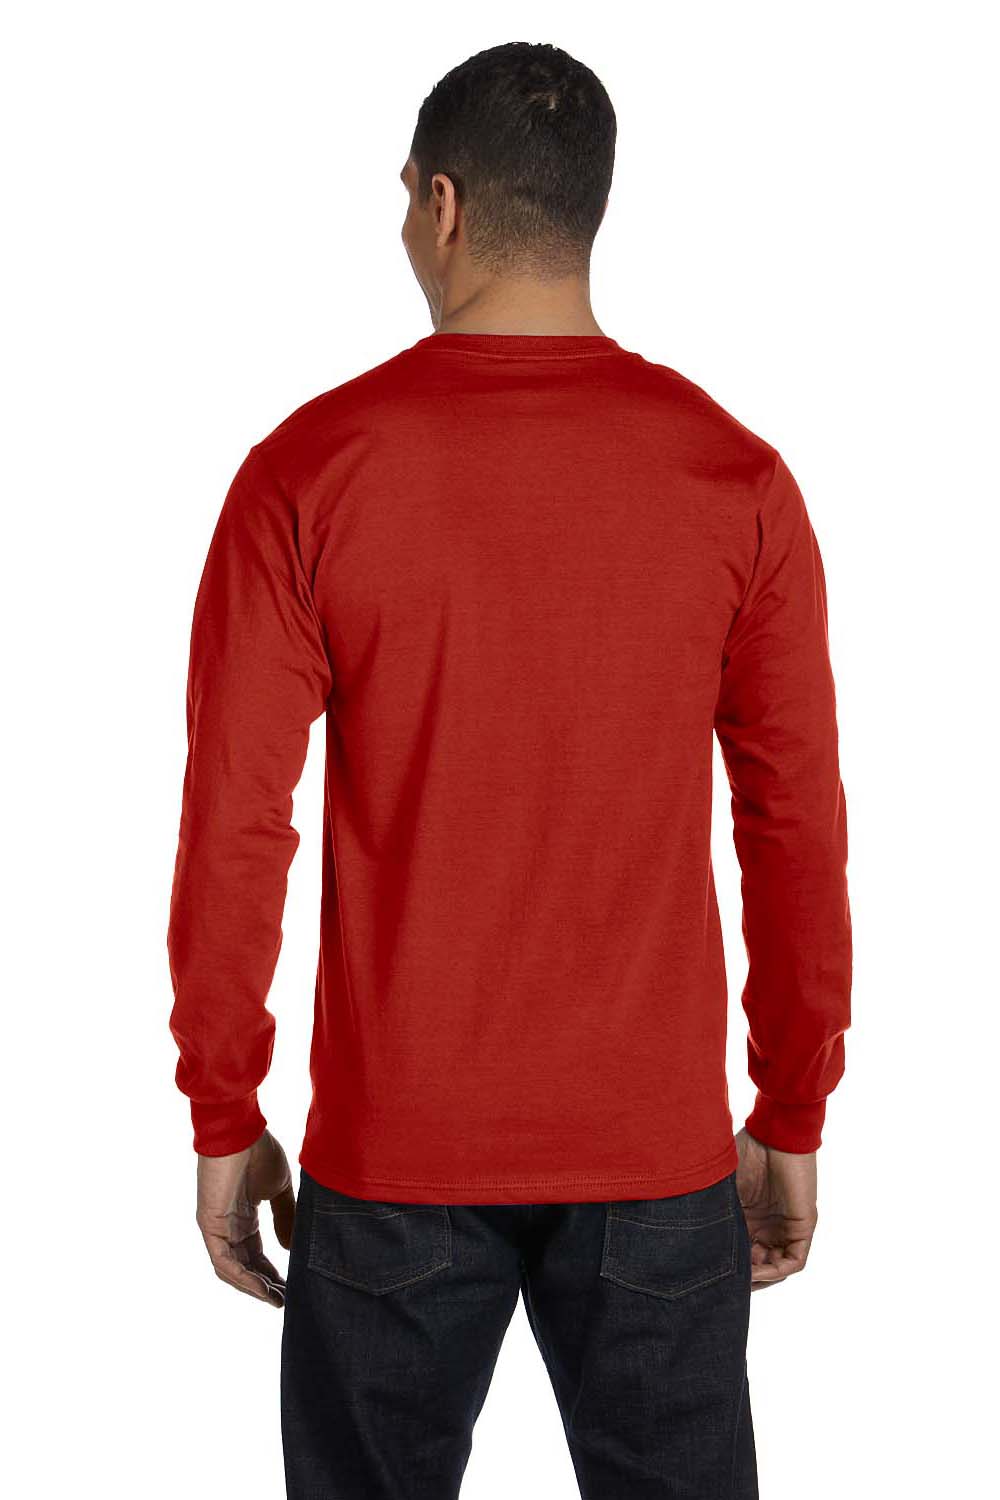 Hanes 5186 Mens Beefy-T Long Sleeve Crewneck T-Shirt Red Back